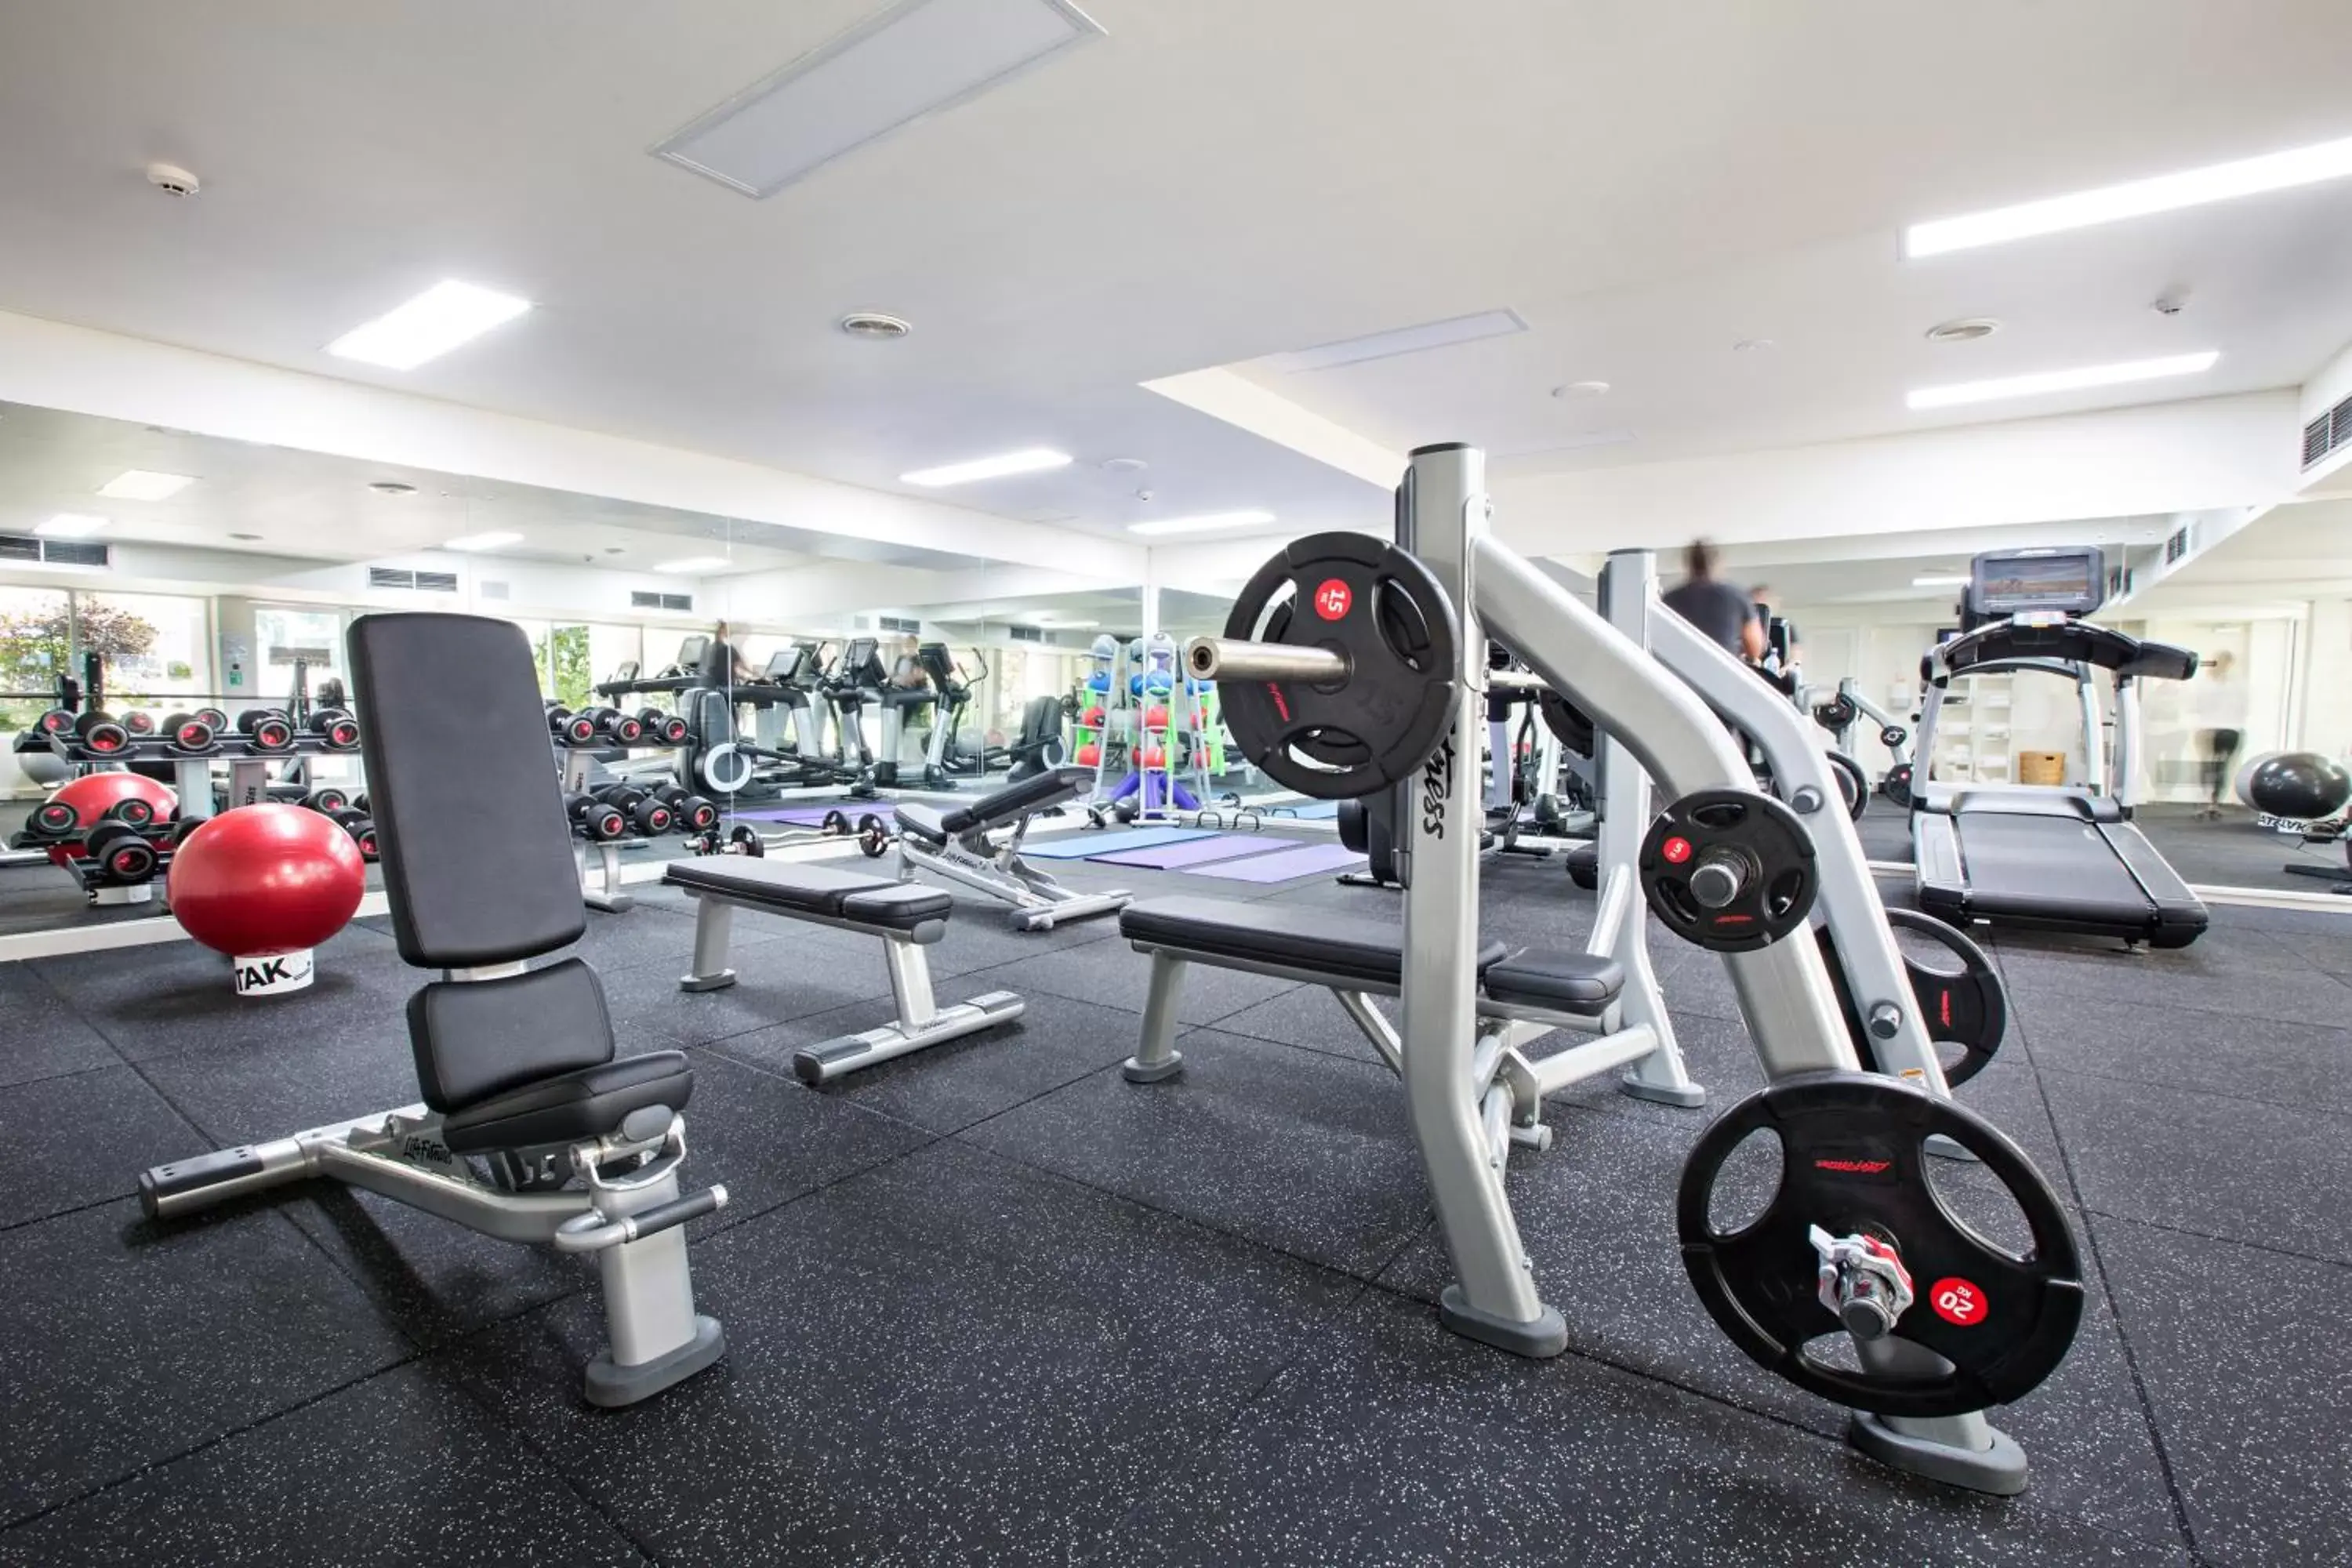 Fitness centre/facilities, Fitness Center/Facilities in Shangri-La The Marina, Cairns